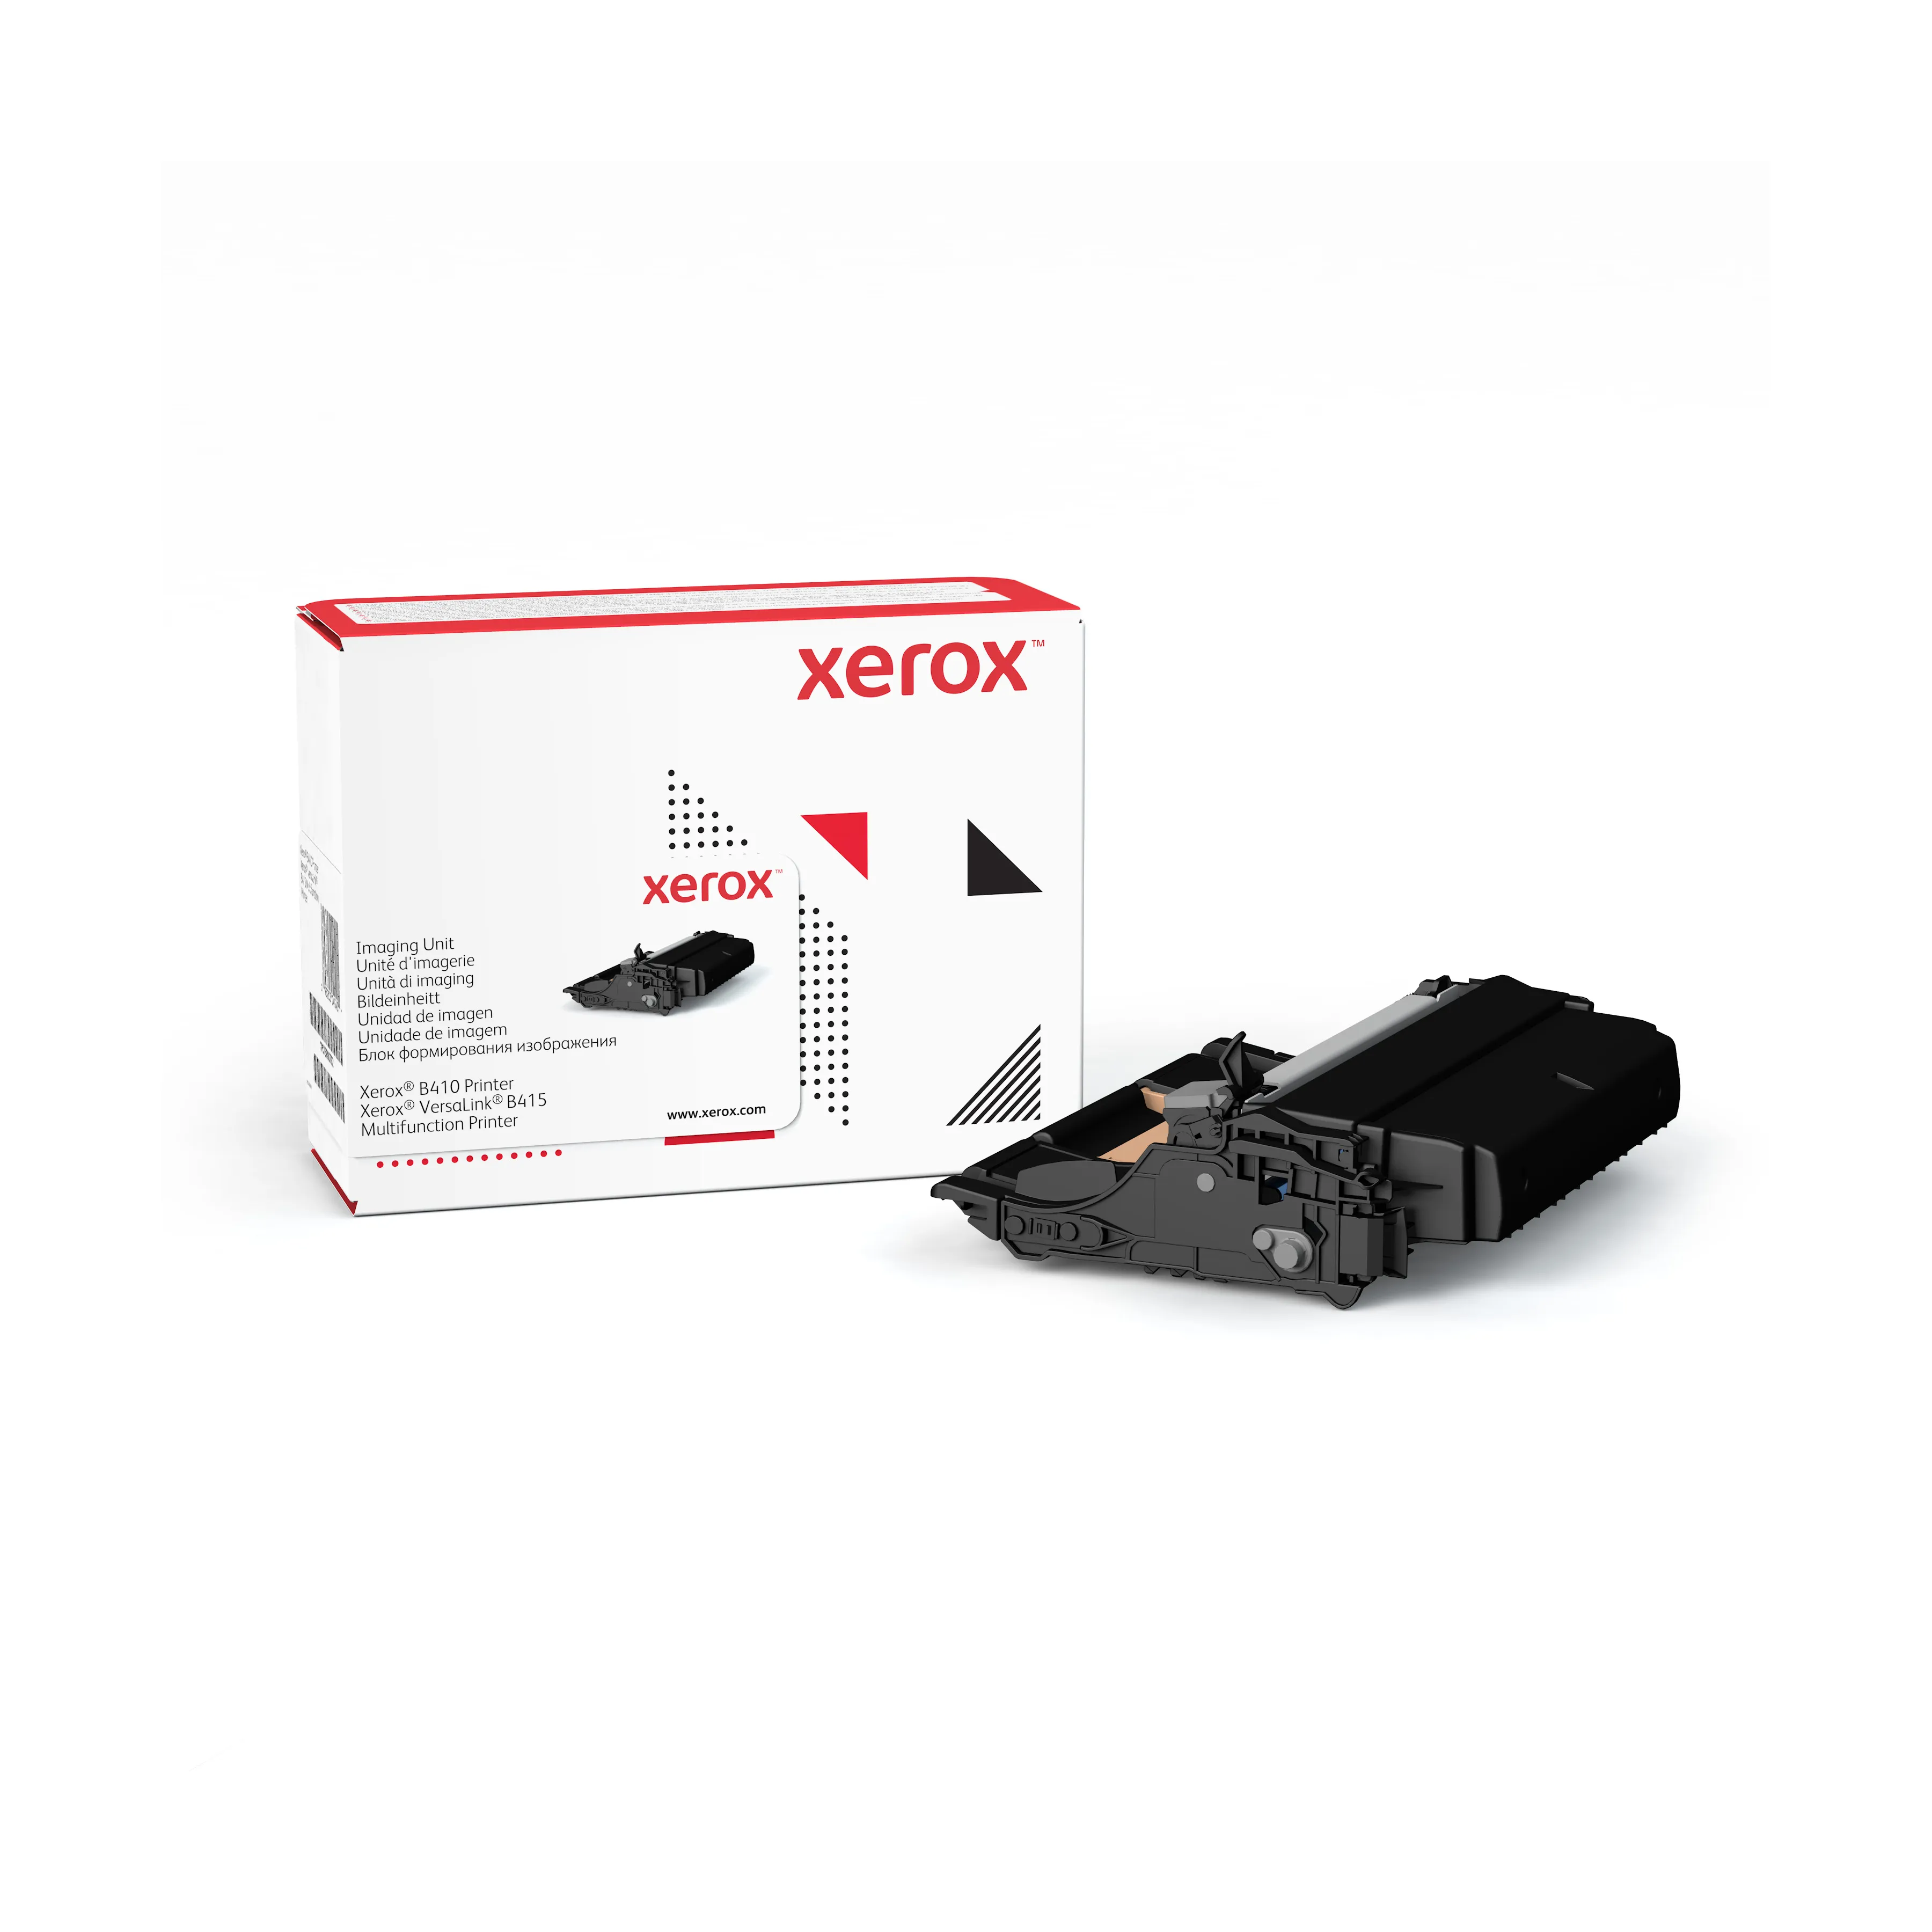 Achat XEROX B410/B415 Drum Cartridge 75000 Pages au meilleur prix